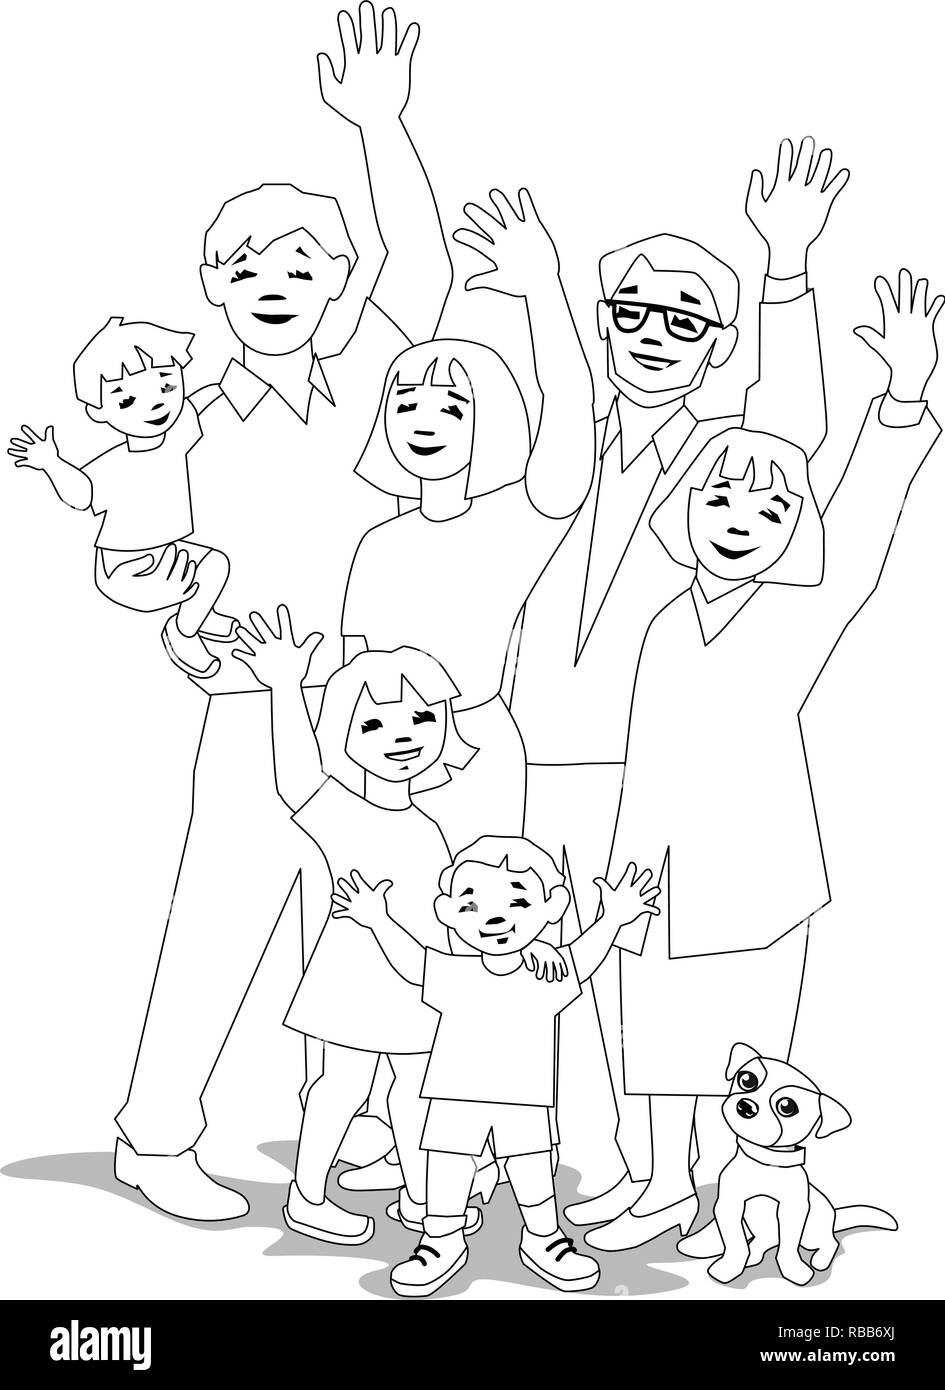 Family Cartoon Black and White Stock Photos & Images - Alamy